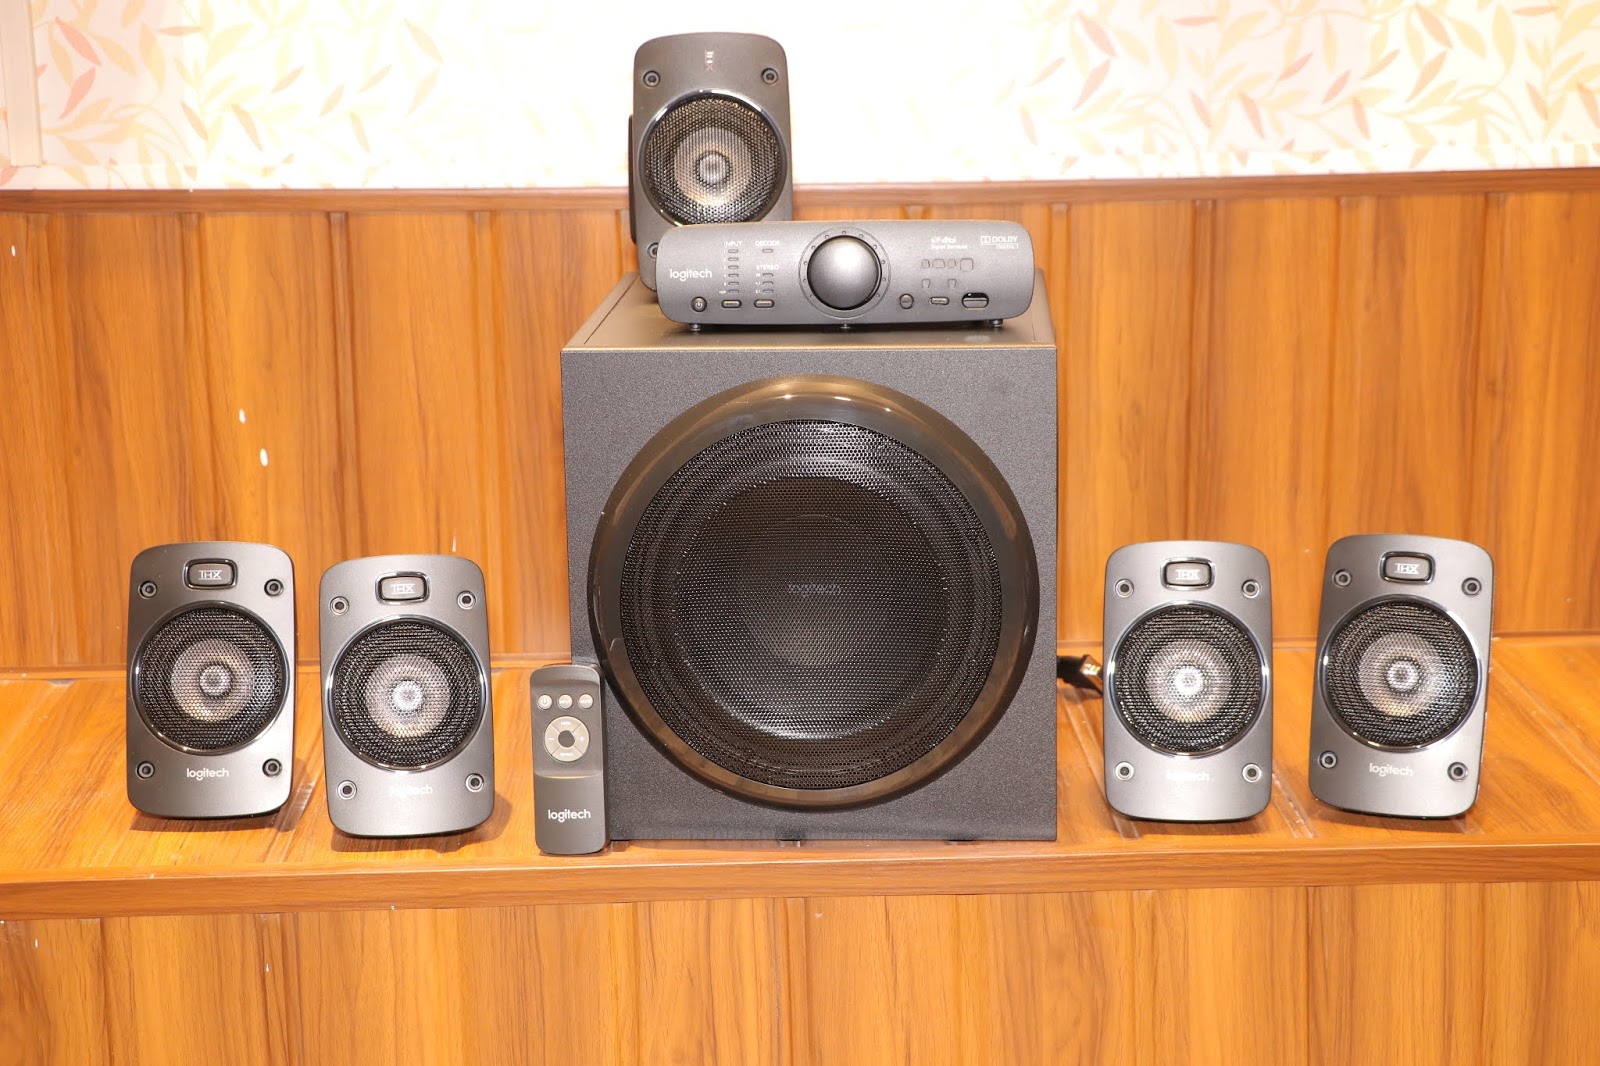 Best Surround Sound Under 20K | Logitech Z906 Review | Best Speakers With Dolby Digital, DTS & THX Certification